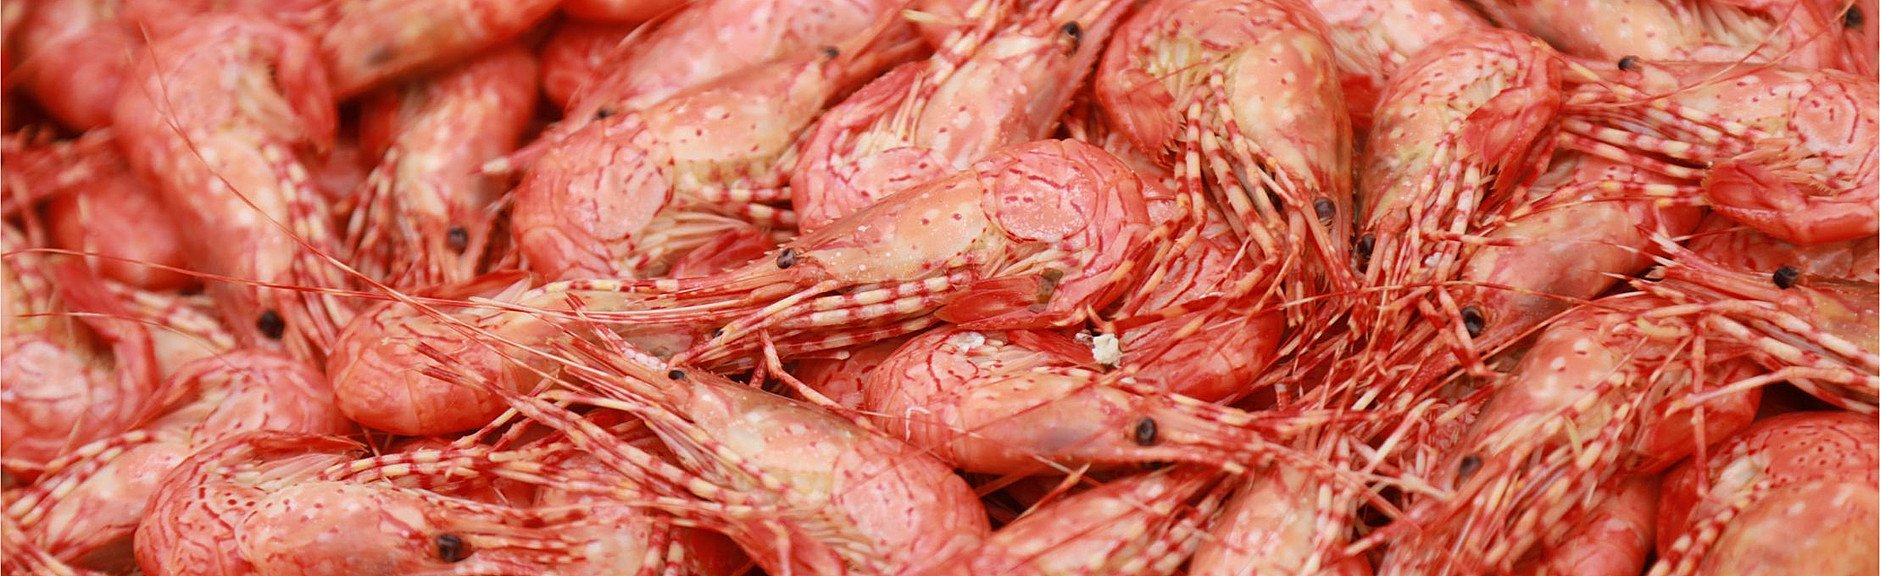 Fresh-Caught Shrimp